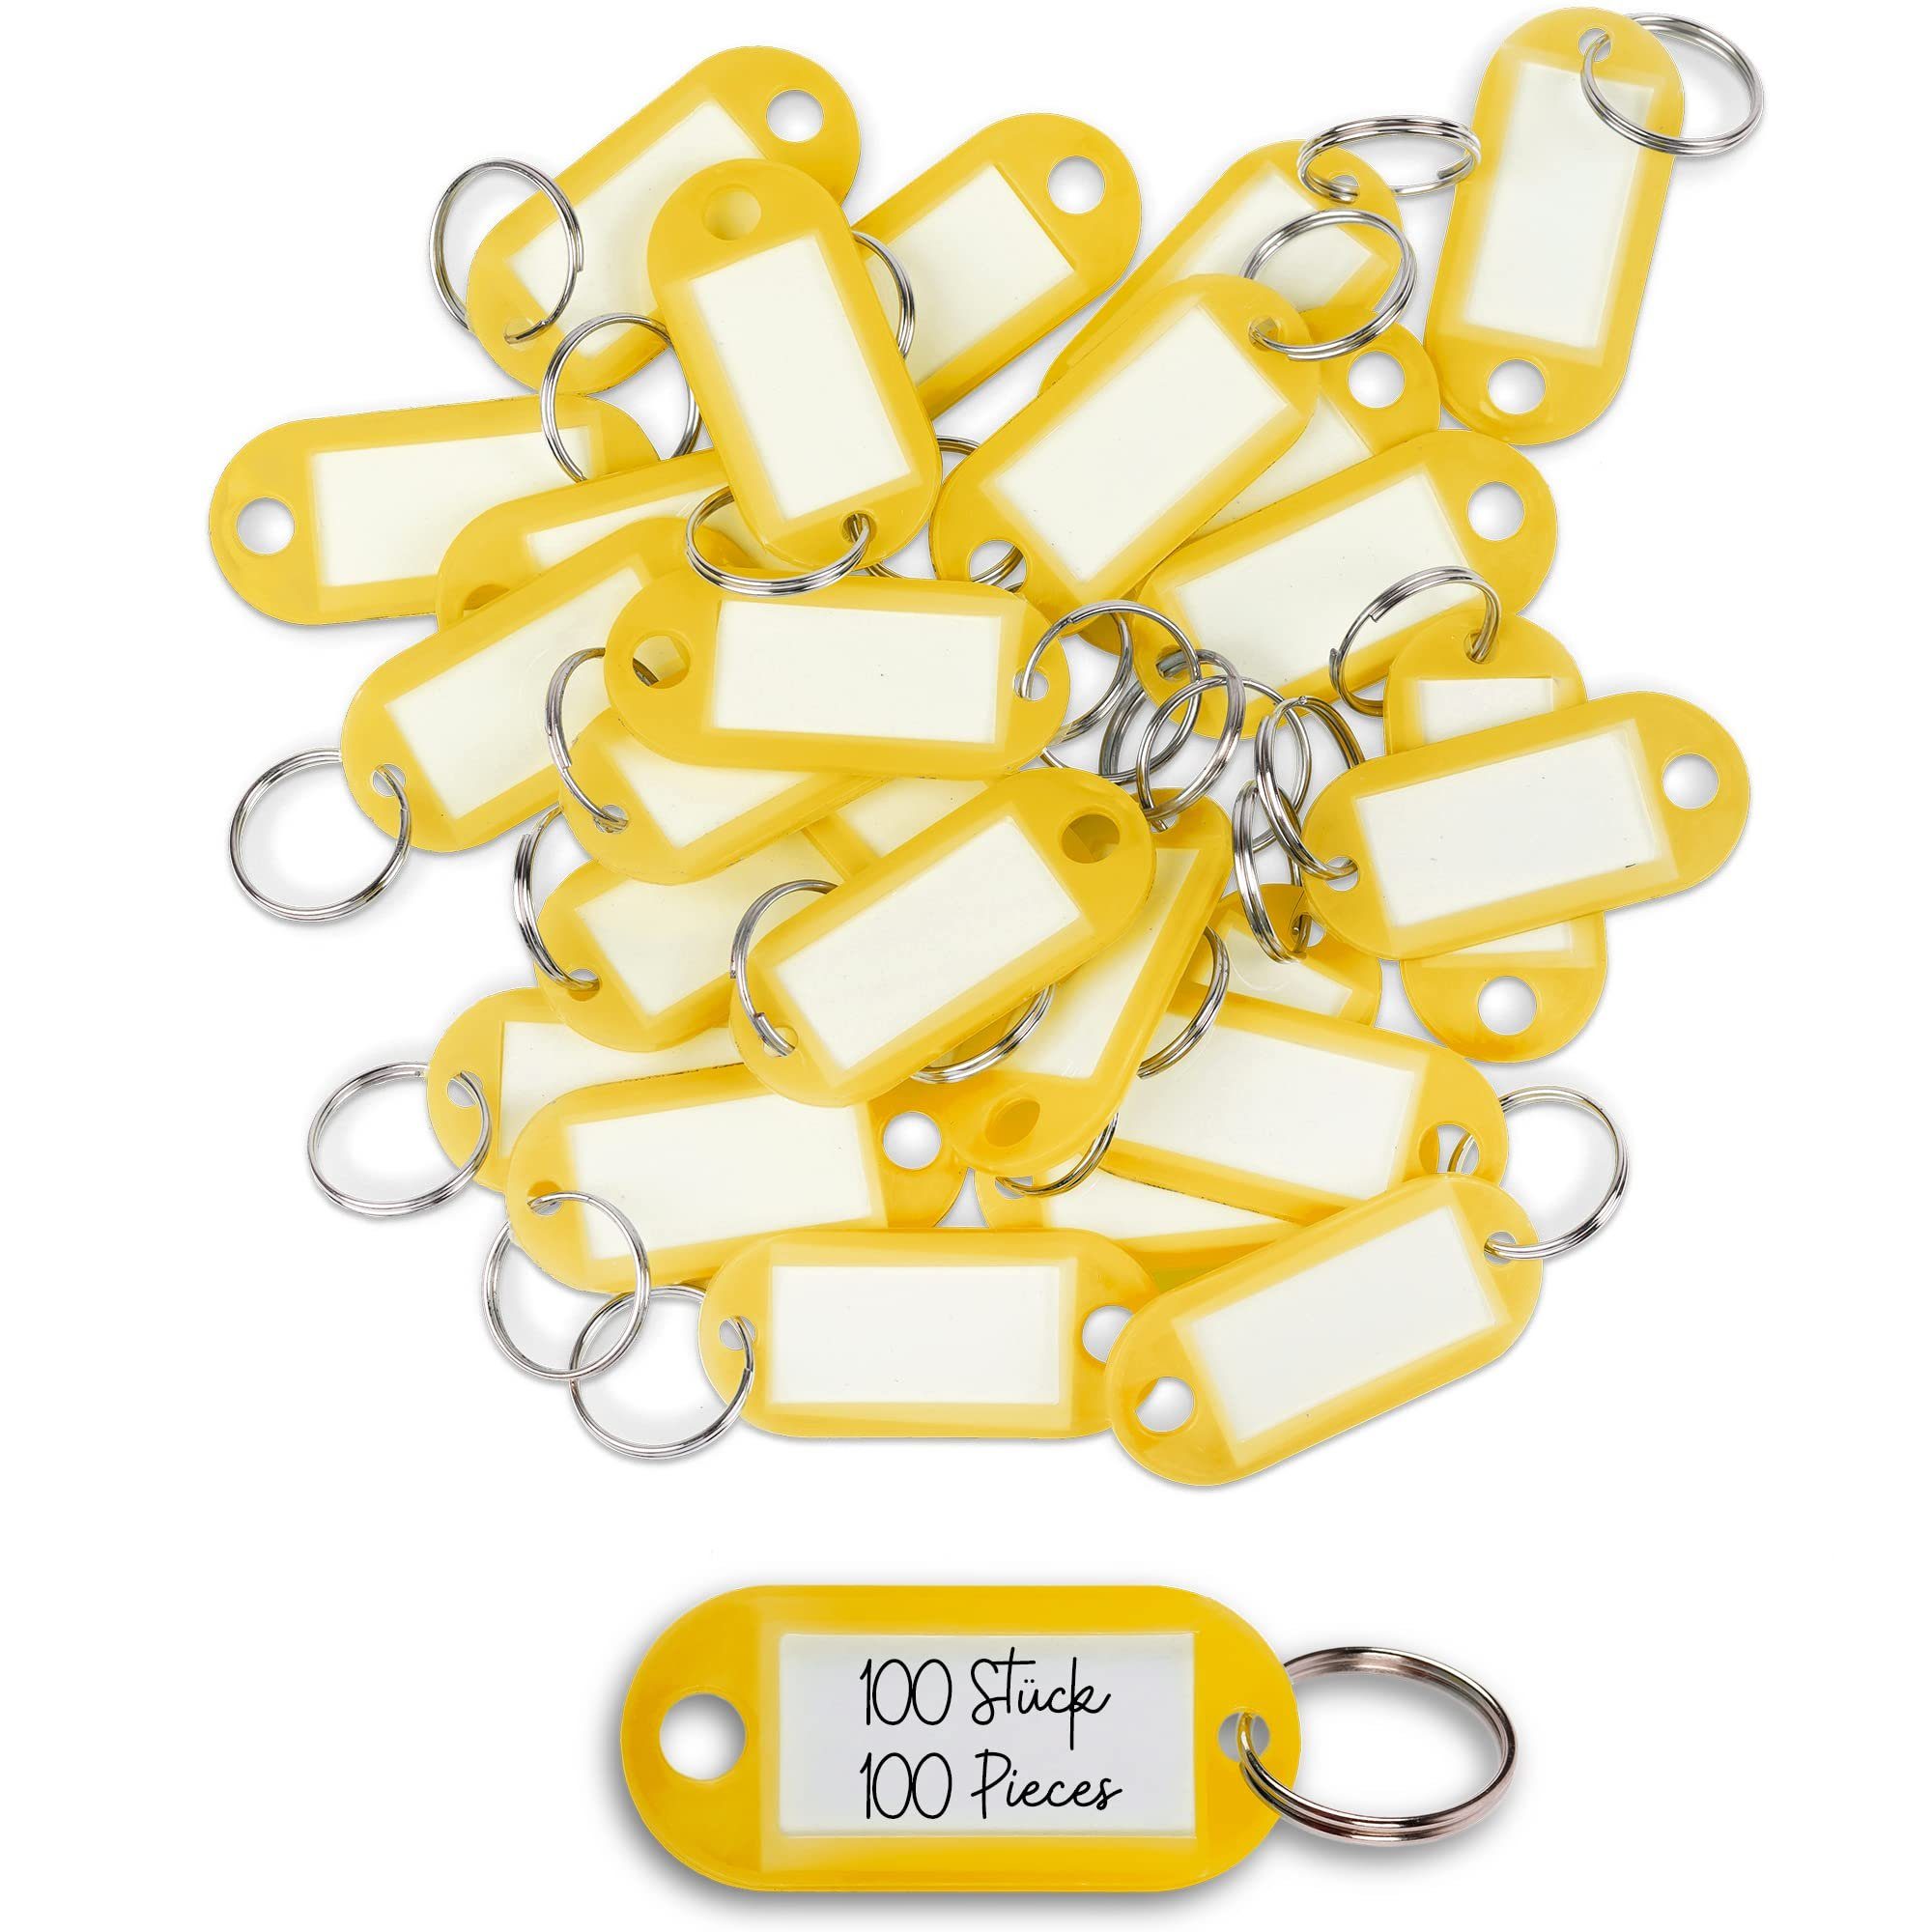 WINTEX Schlüsselanhänger Schlüsselanhänger Wintex 100x - Strapazierfähige Anhänger - Gelb | Schlüsselanhänger